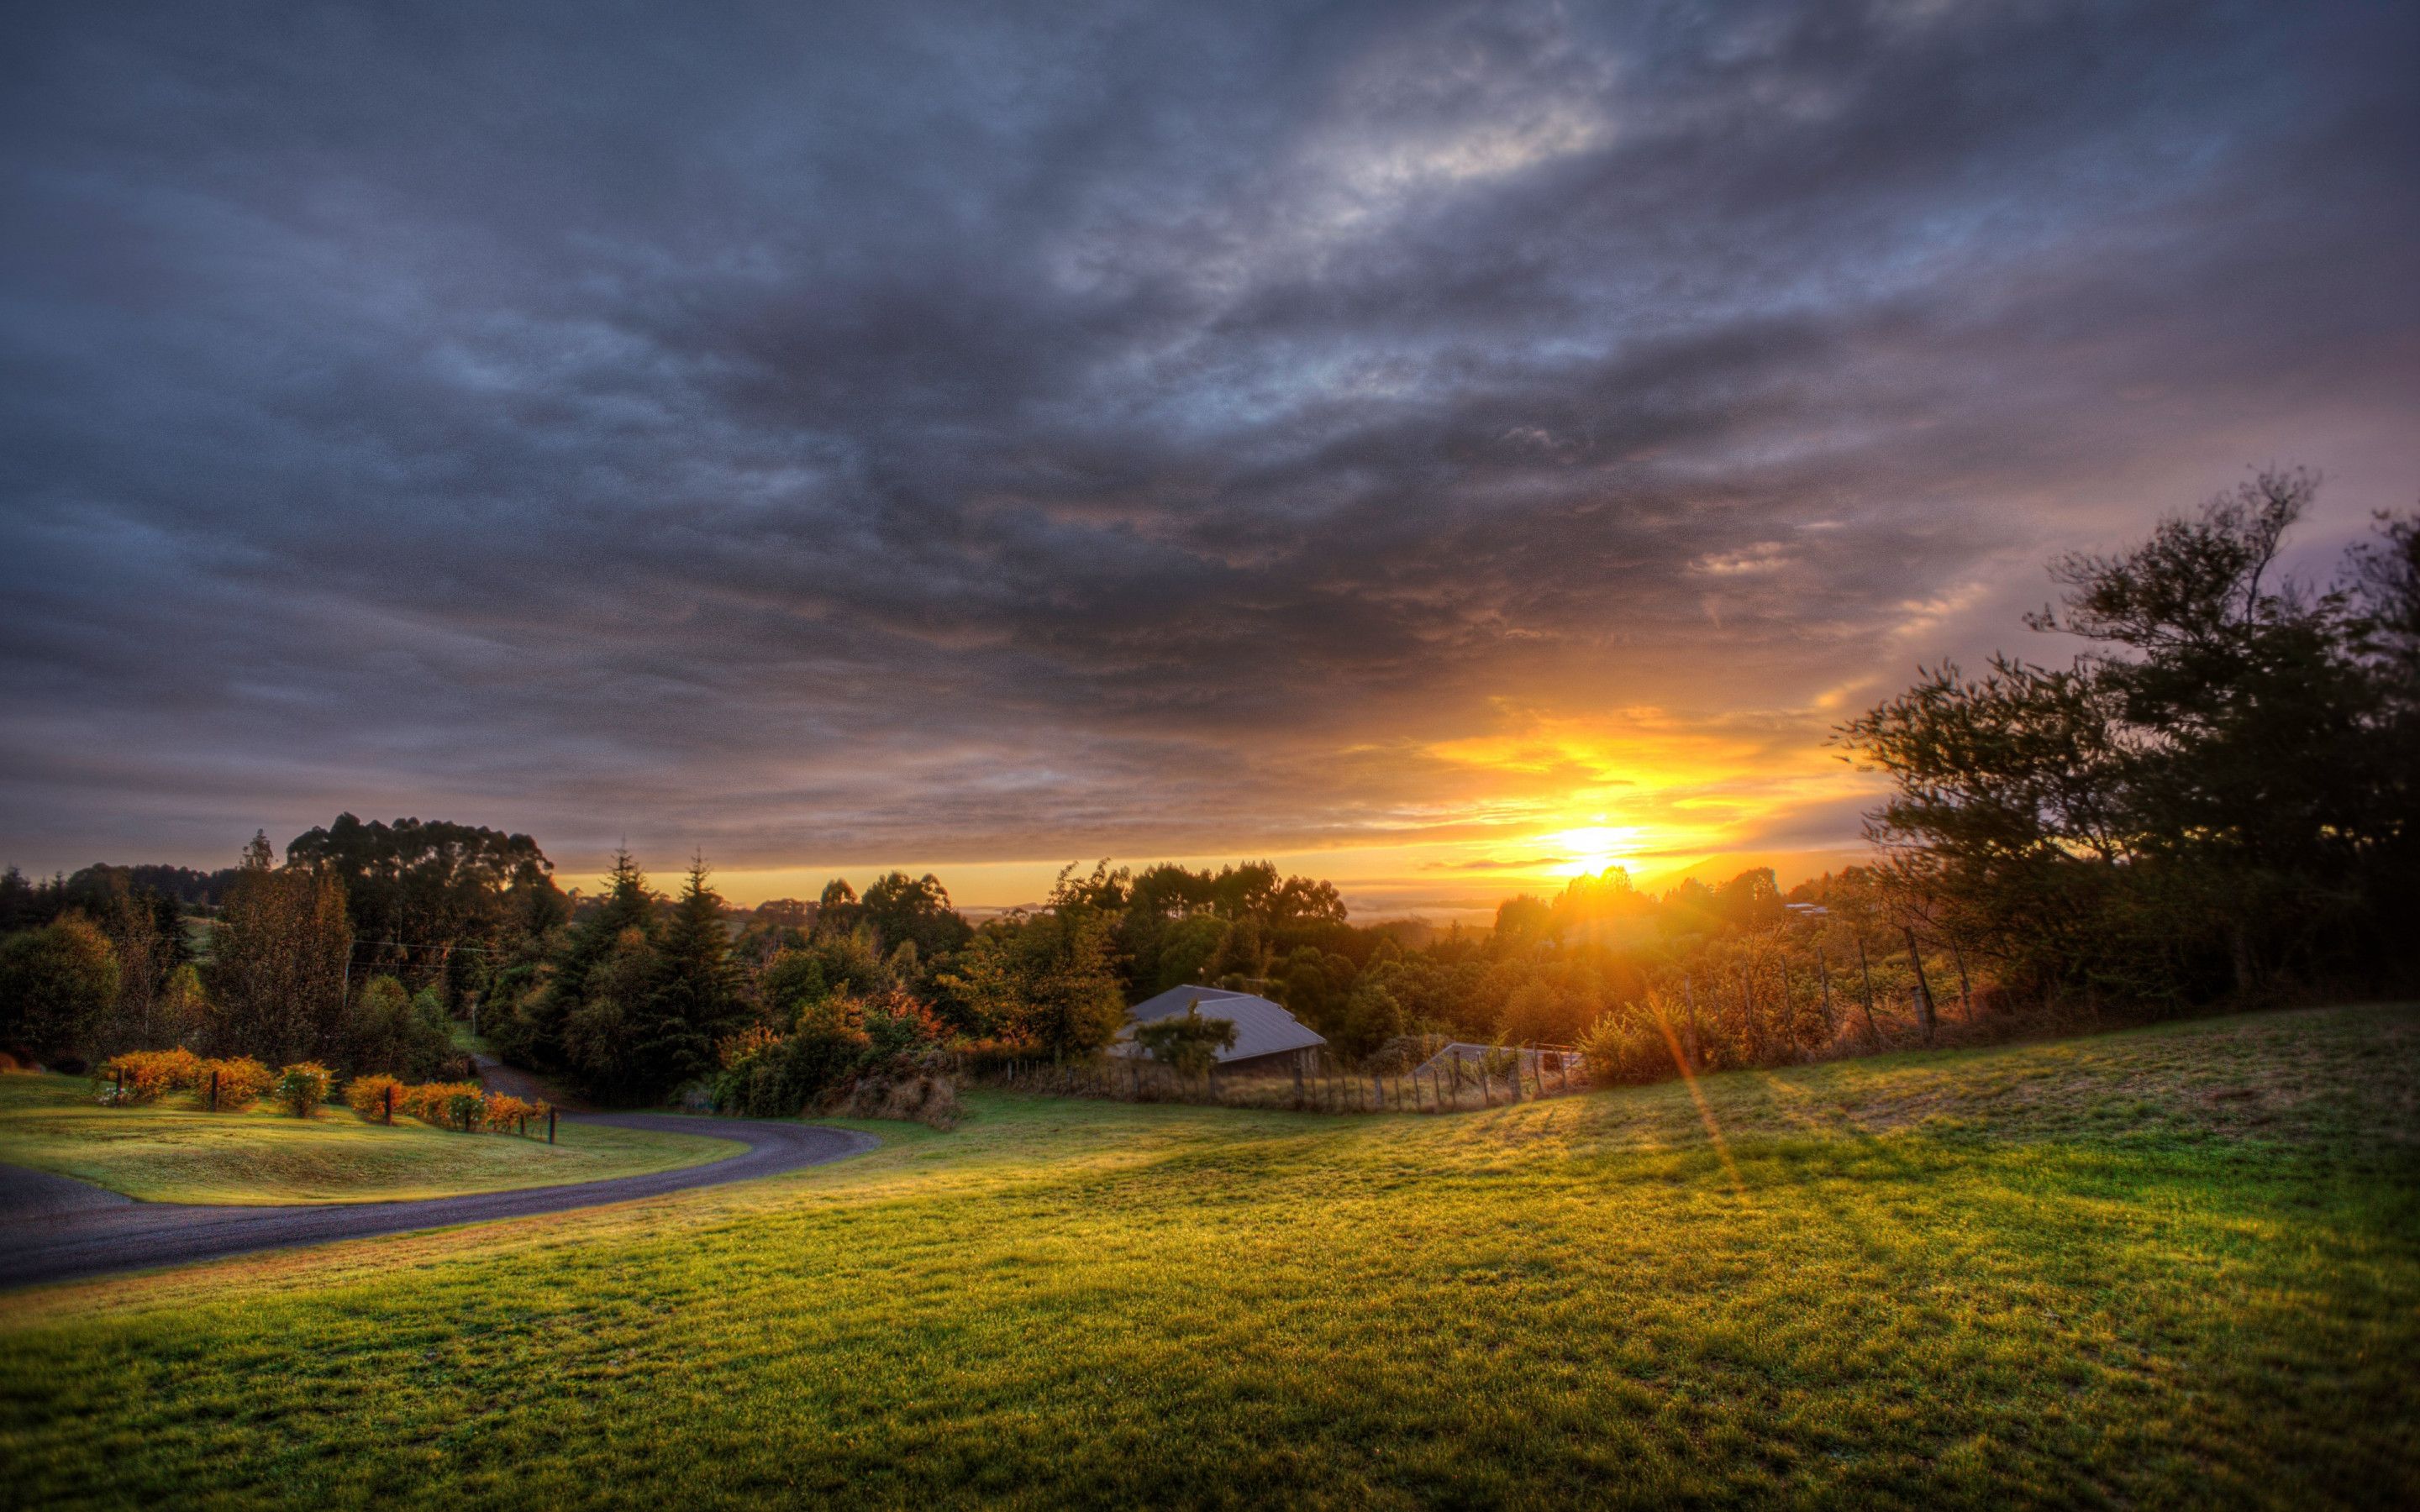 Download wallpaper: Landscape, meadow, sunset, clouds 2880x1800